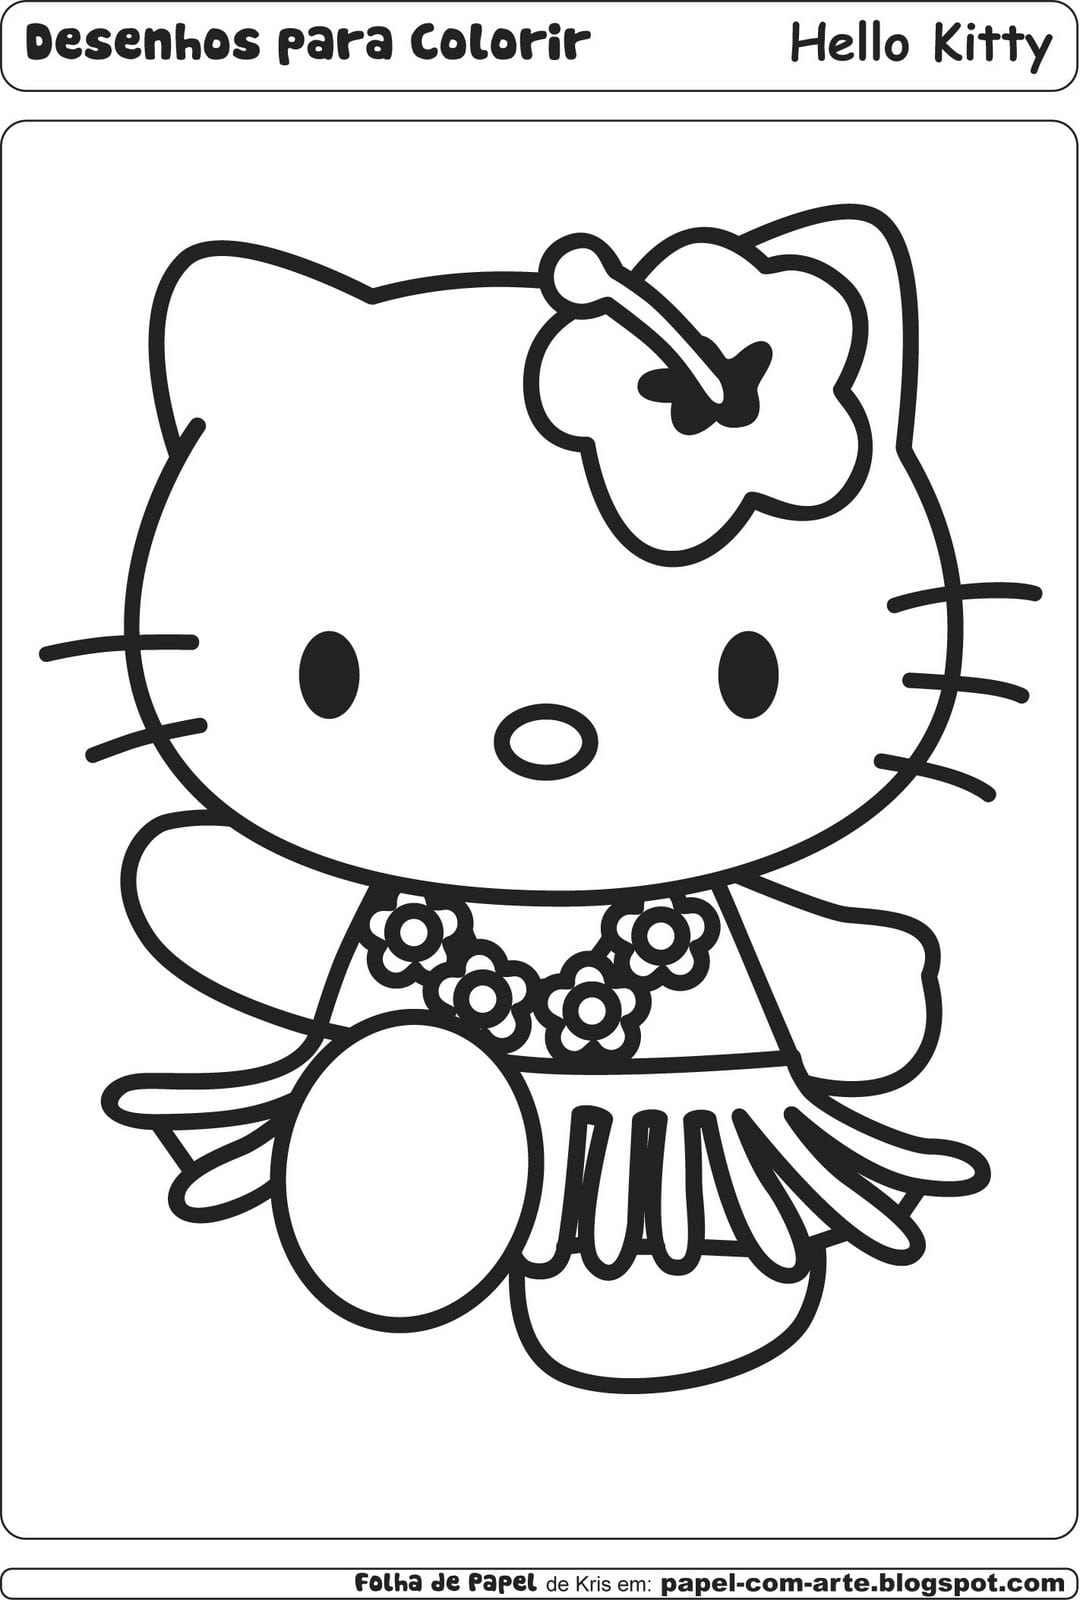 Colorir Hello Kitty